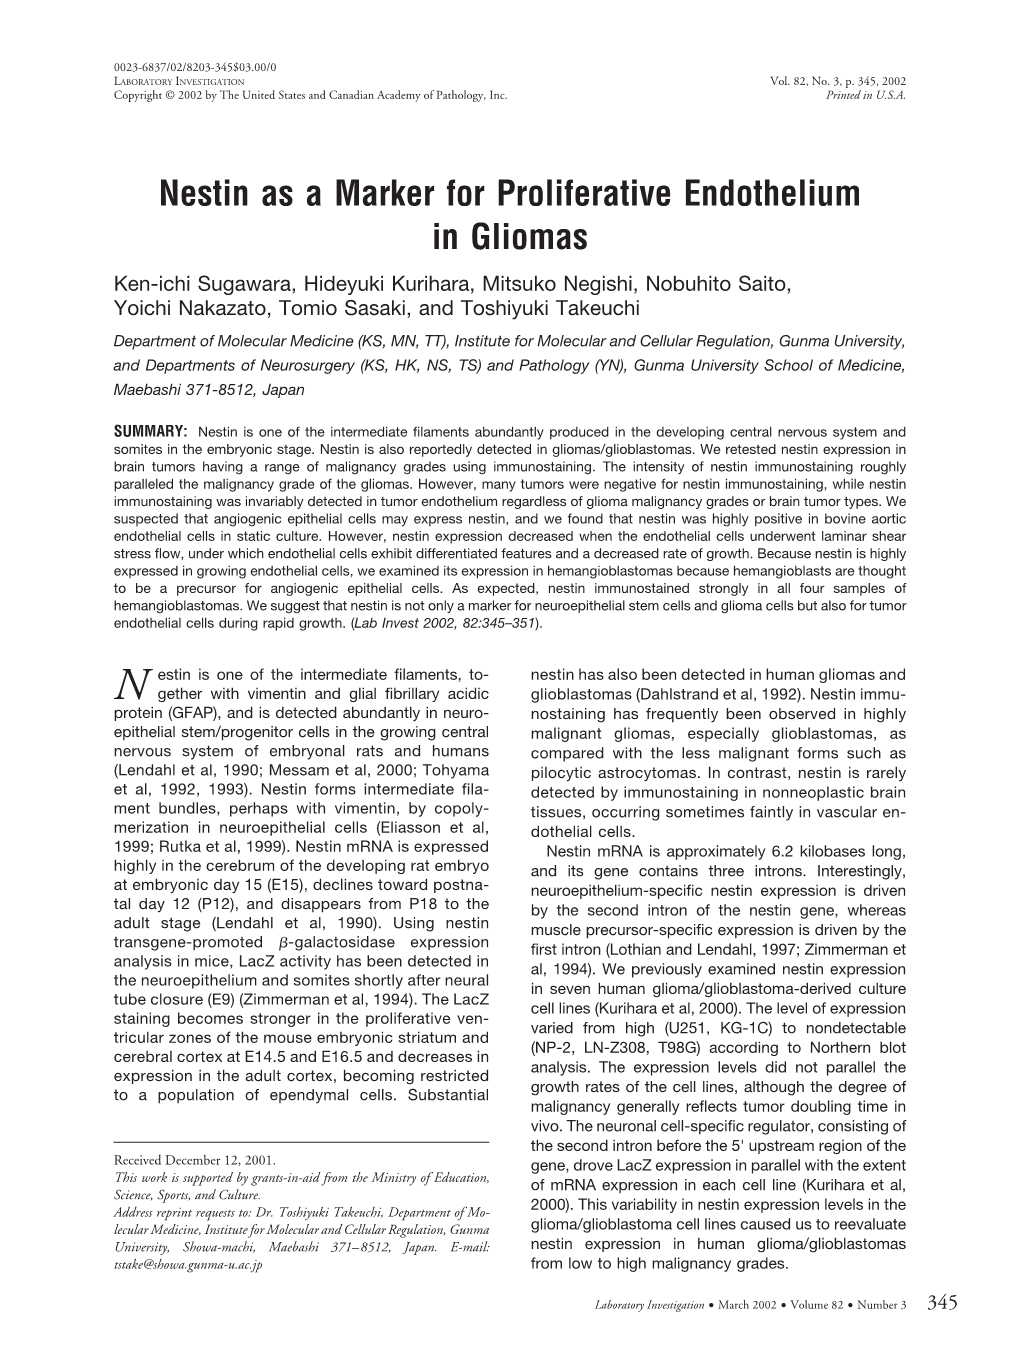 Nestin As a Marker for Proliferative Endothelium in Gliomas